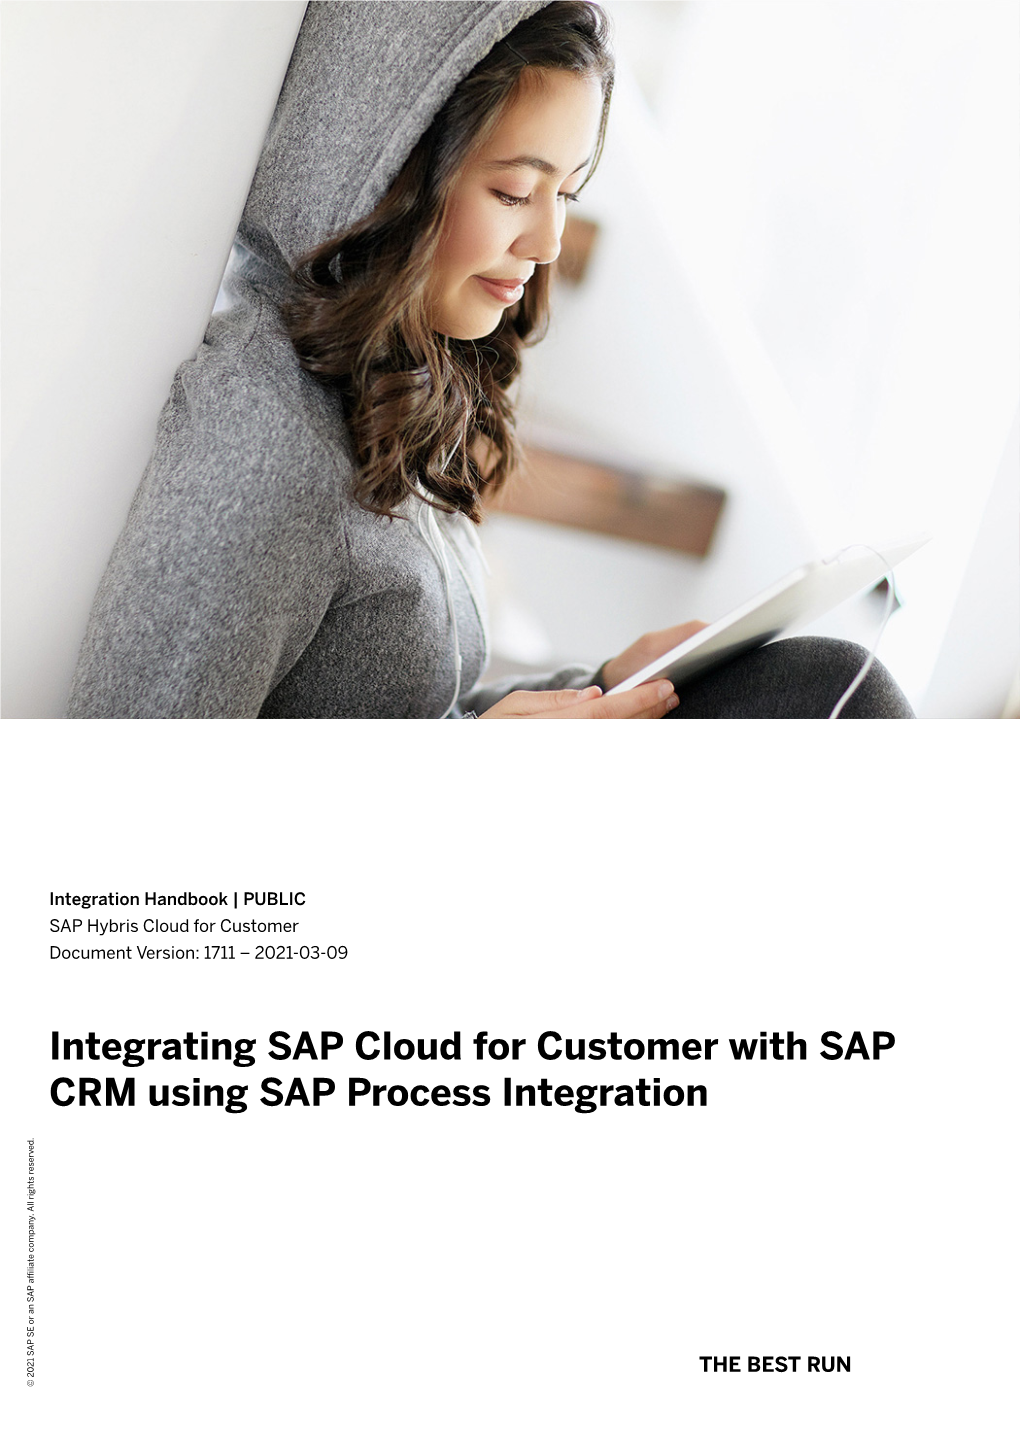 Integrating SAP Cloud for Customer with SAP CRM Using SAP Process Integration Company